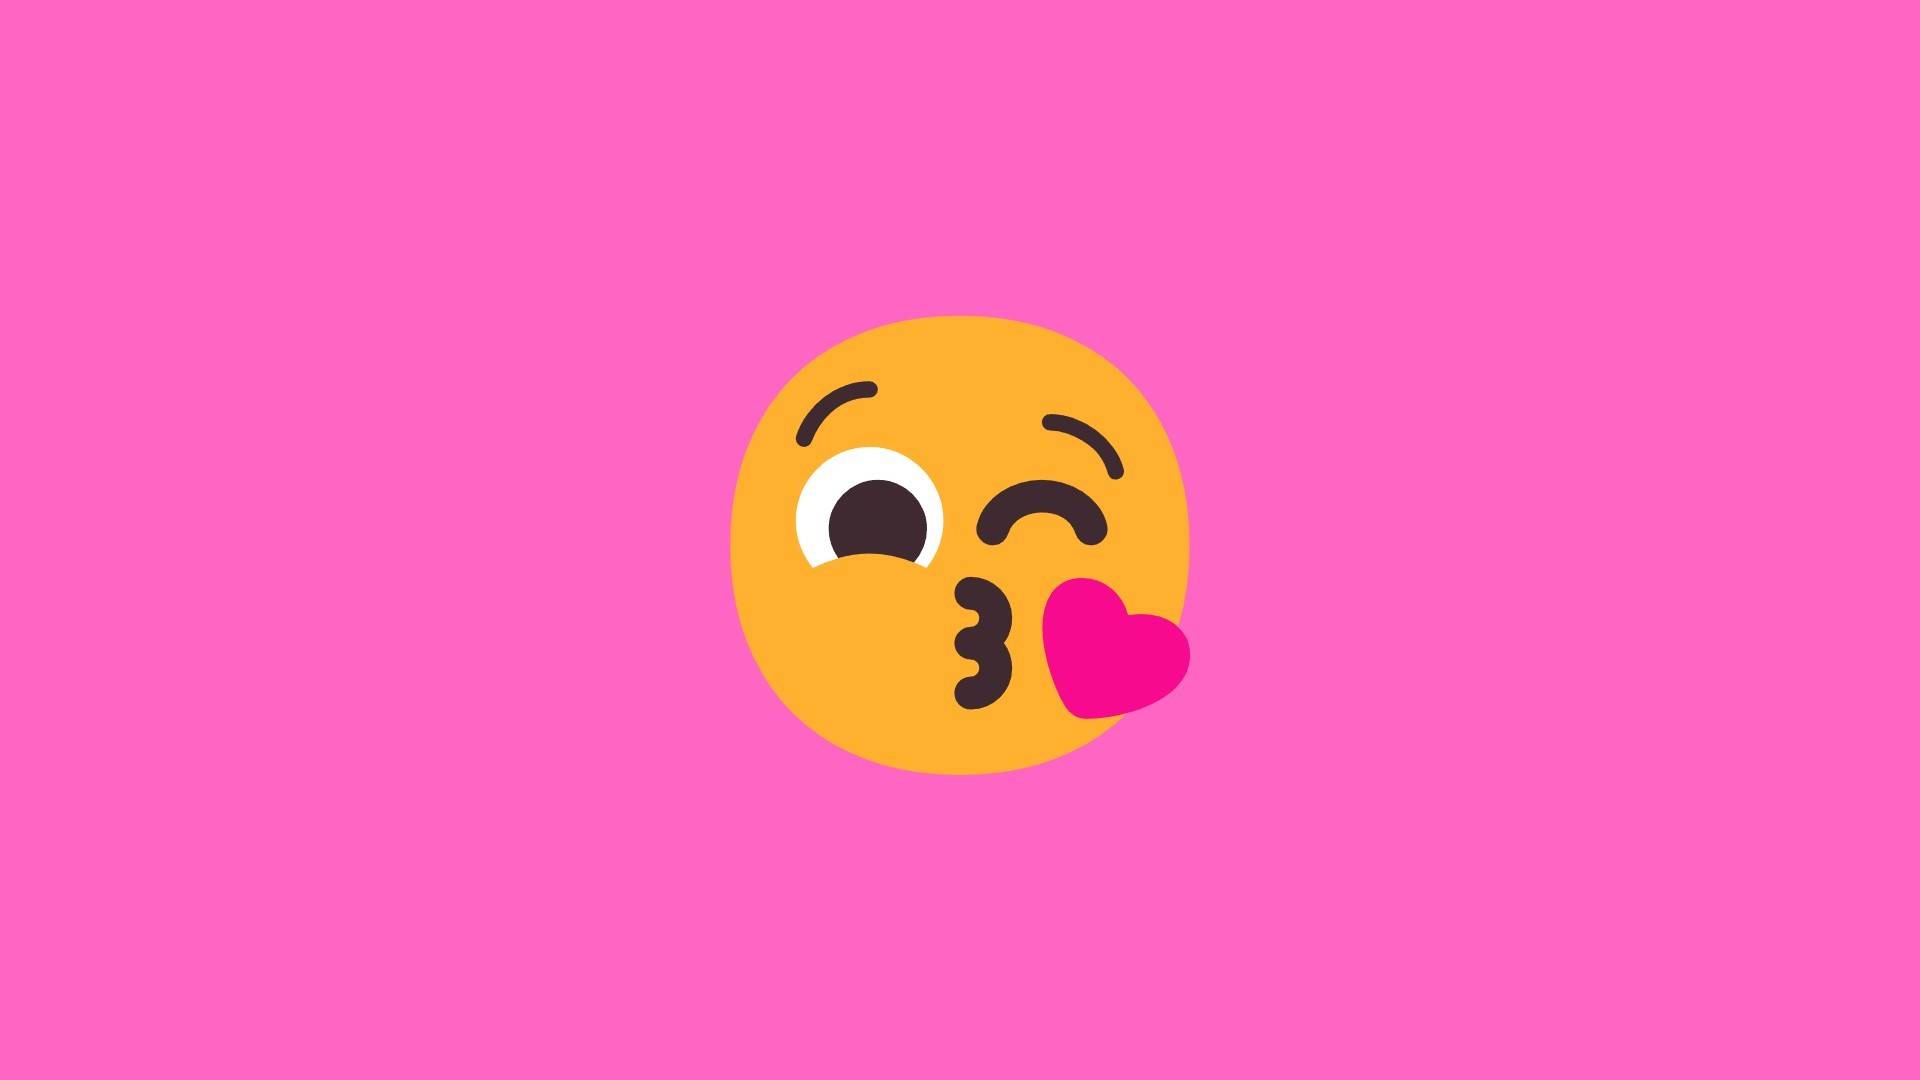 Emoji 7 Face Blowing a Kiss